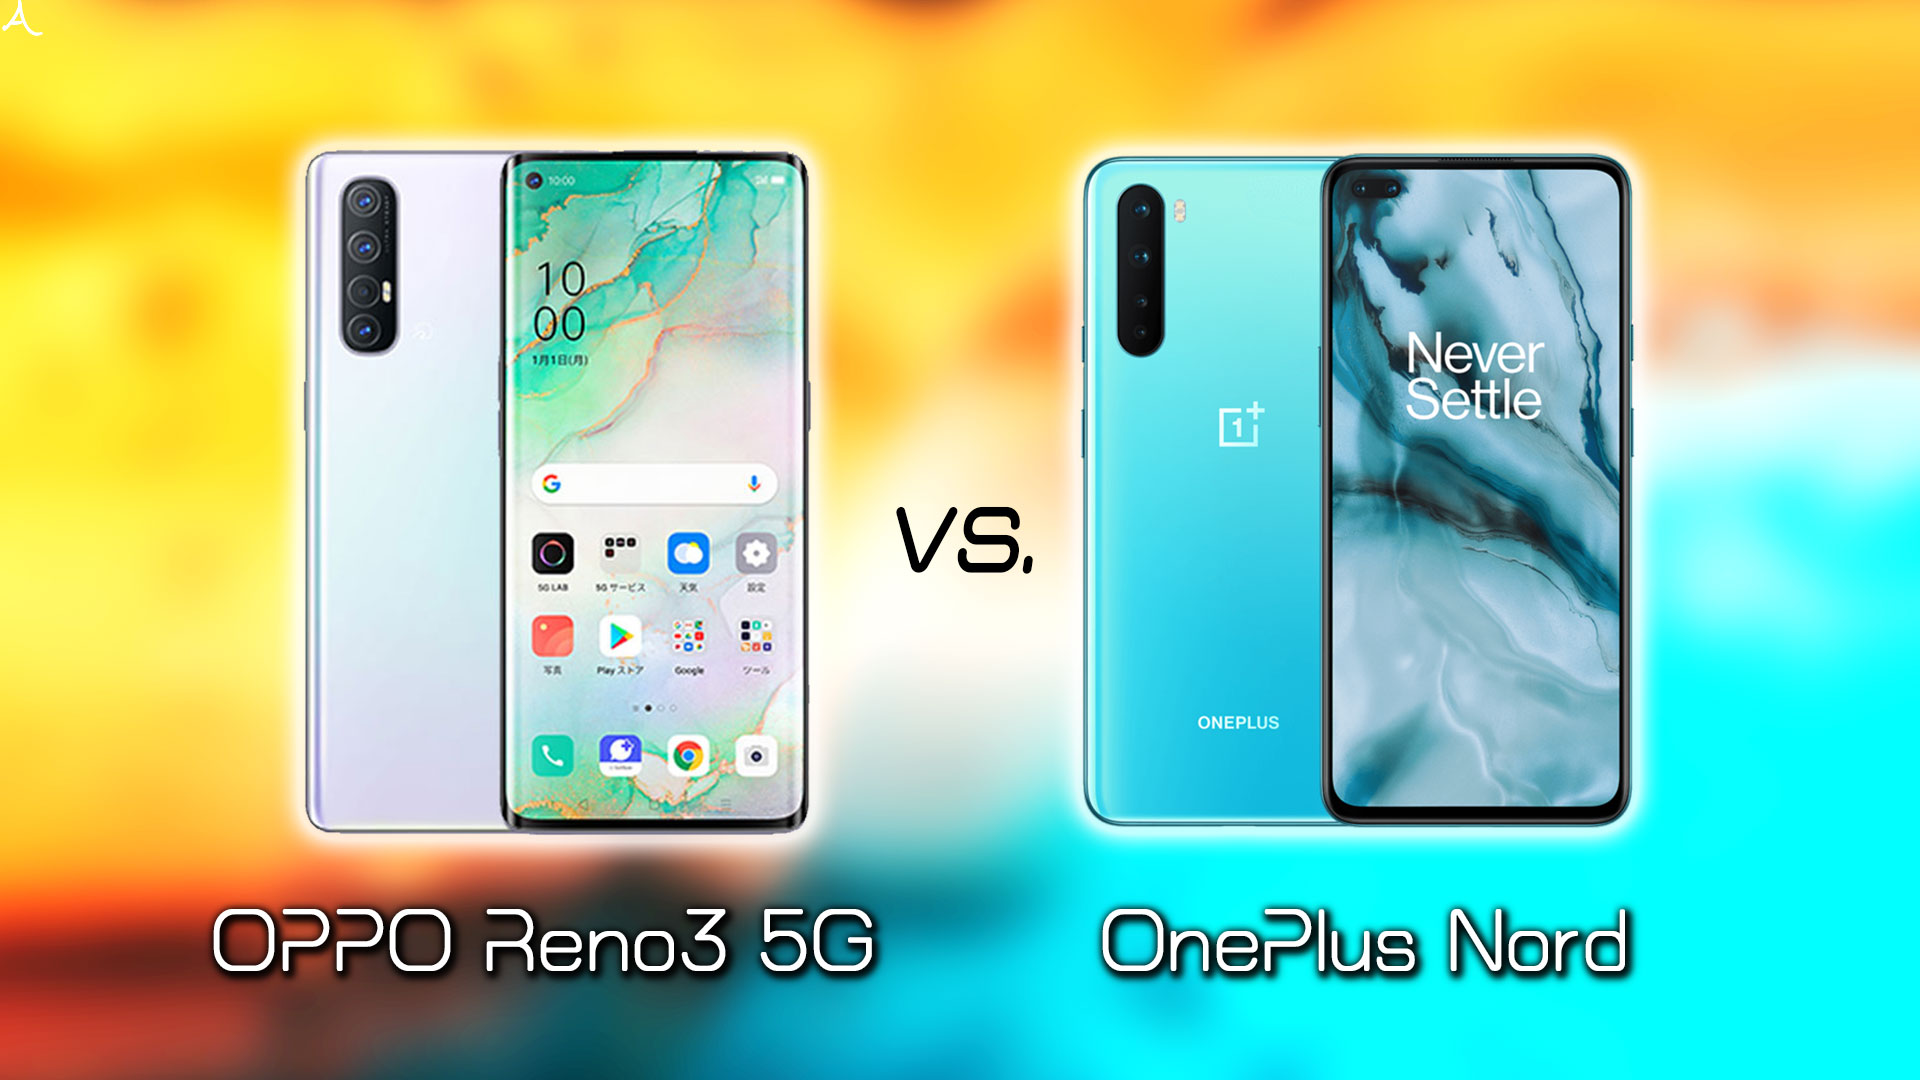 「OPPO Reno3 5G」と「OnePlus Nord」のスペックや違いを細かく比較